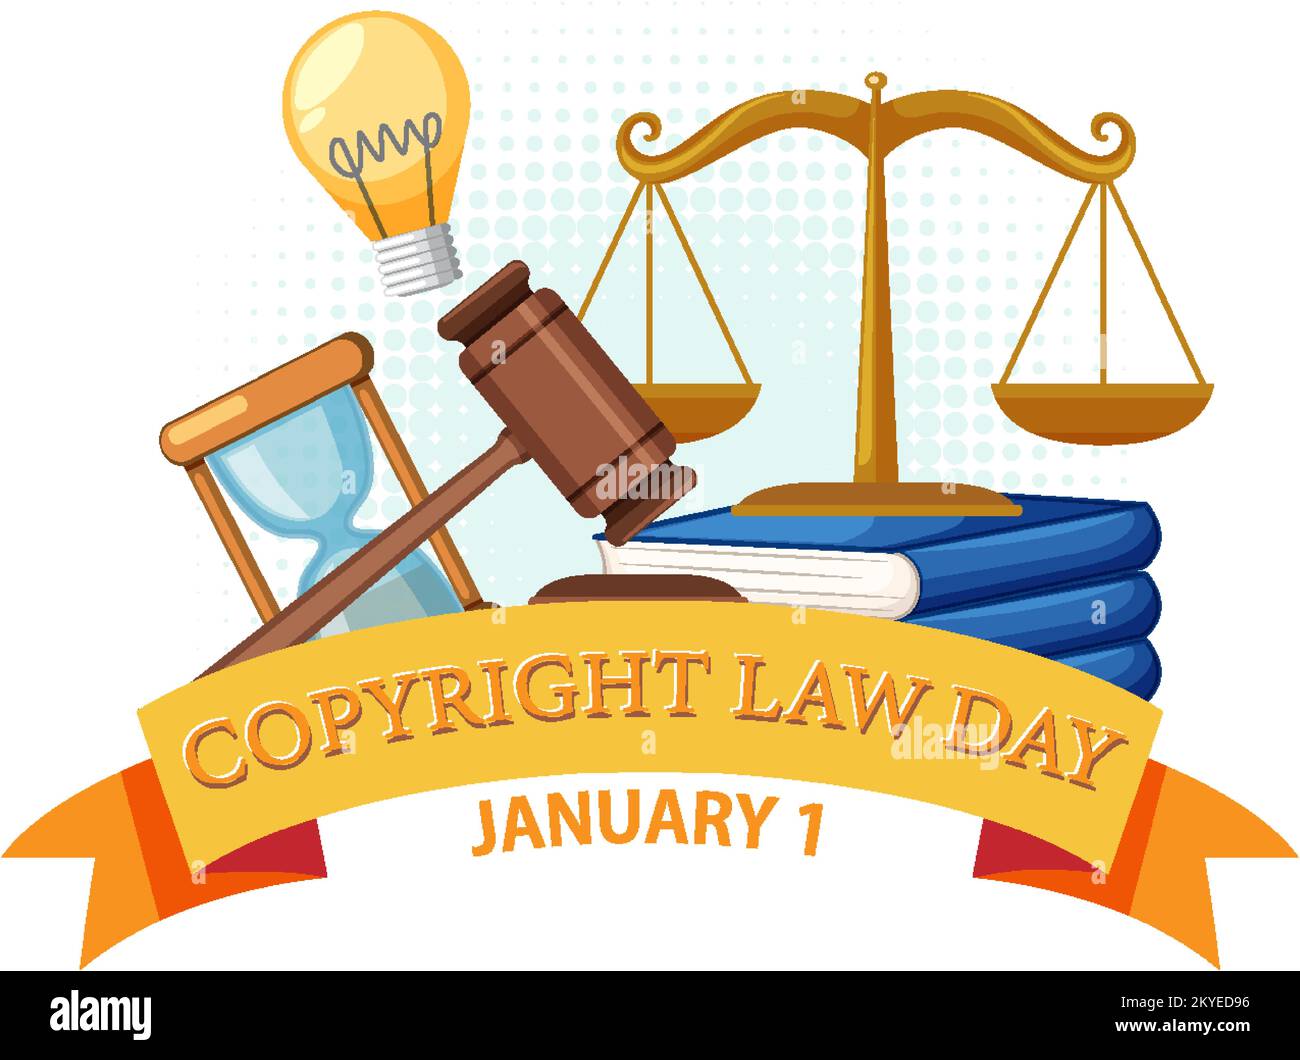 Copyright Law Day Banner Design illustration Stock Vector